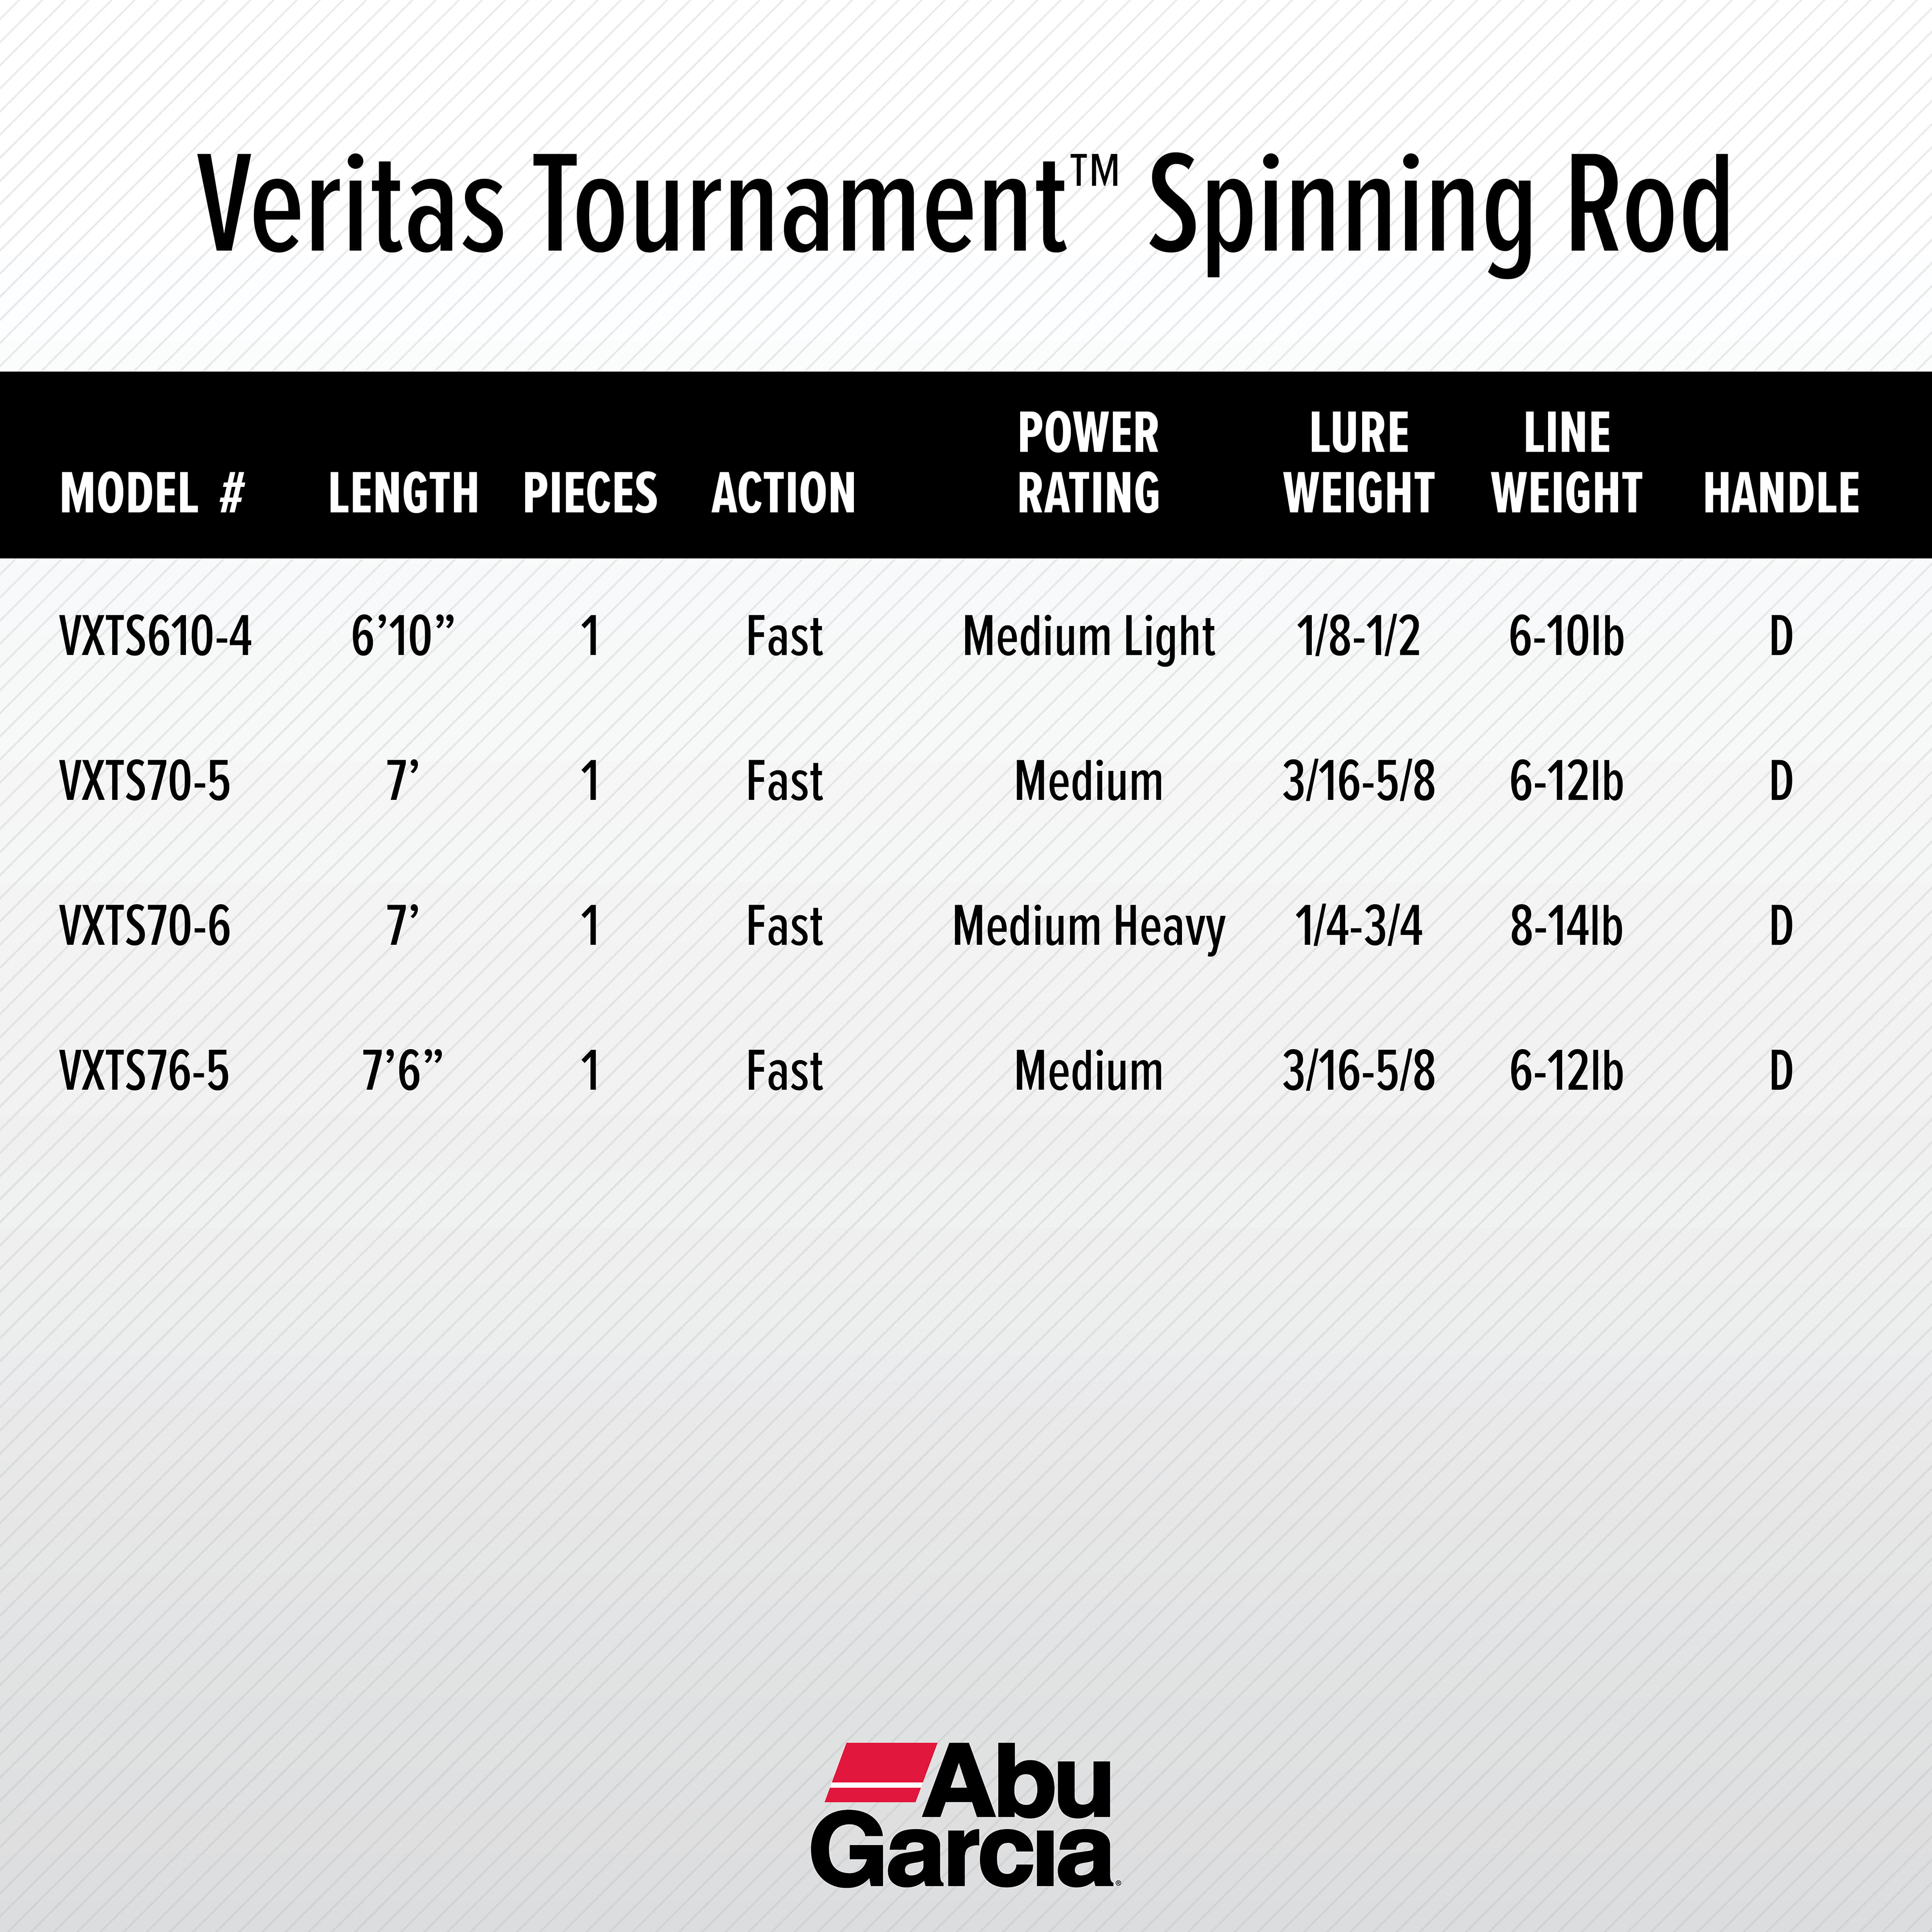 Abu Garcia 7'6” Veritas Tournament Spinning Fishing Rod, 1 Piece Rod 